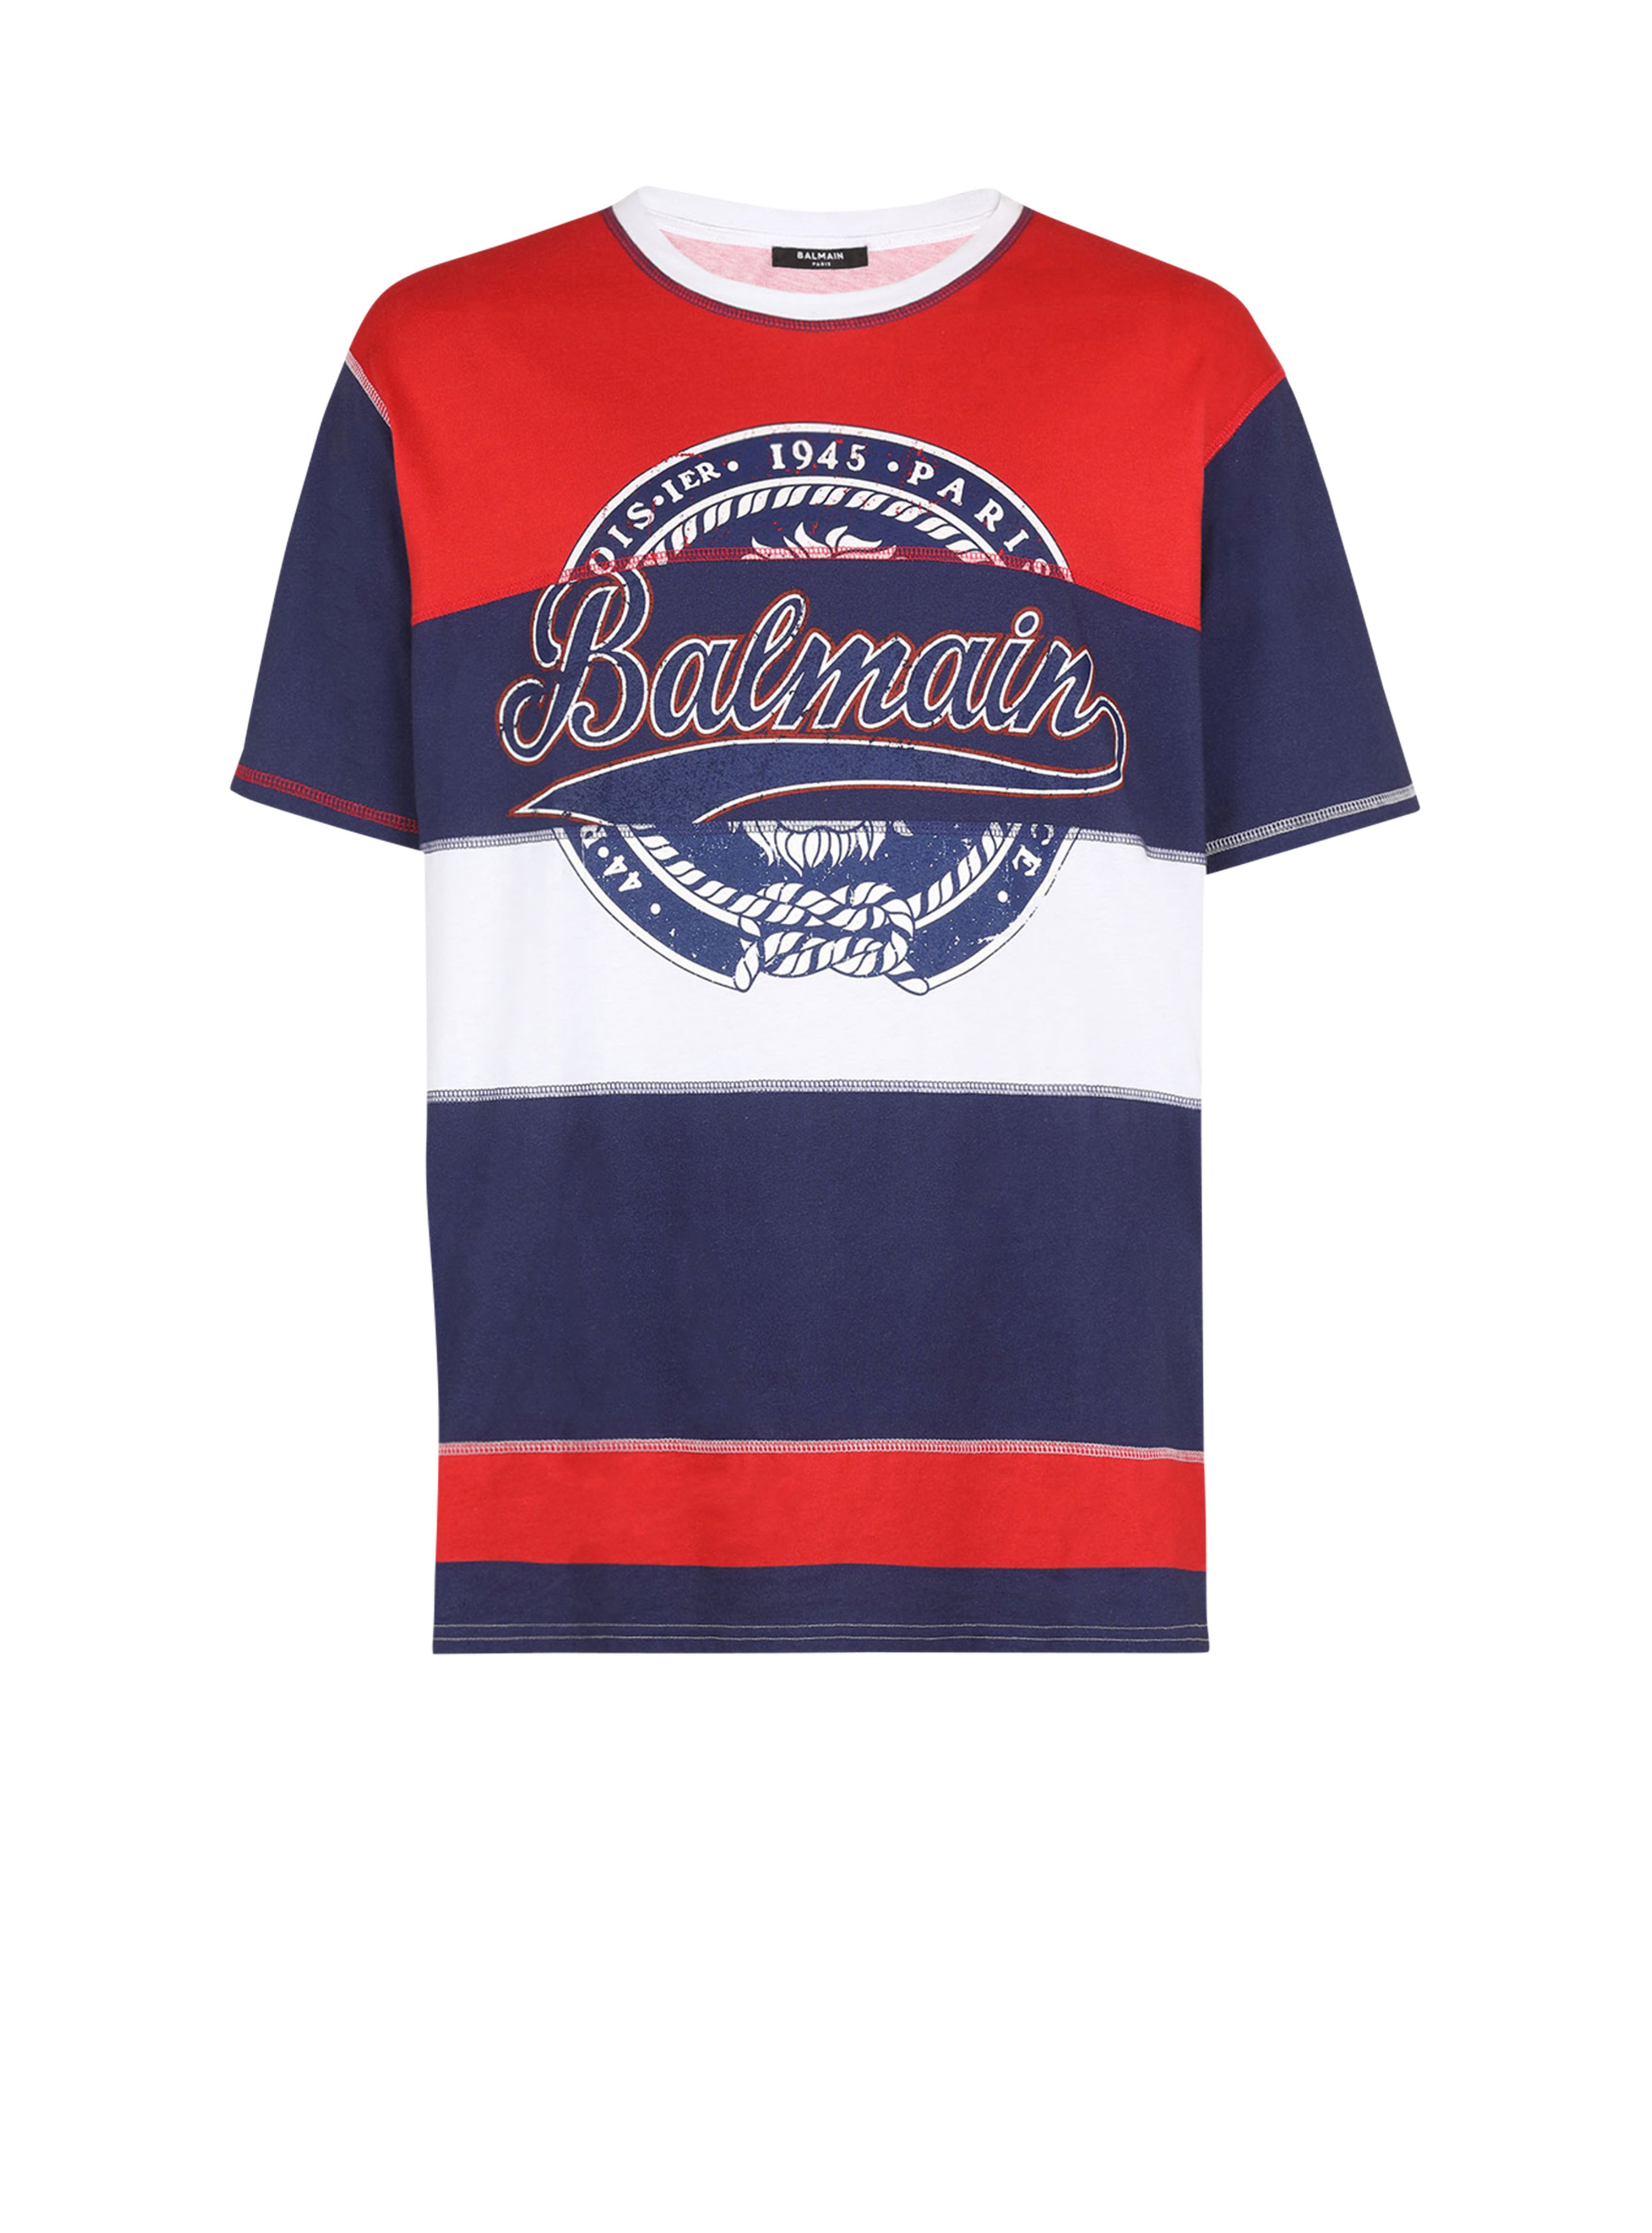 HIGH SUMMER CAPSULE - T-shirt en coton mprimé logo Balmain Paris, multicolore